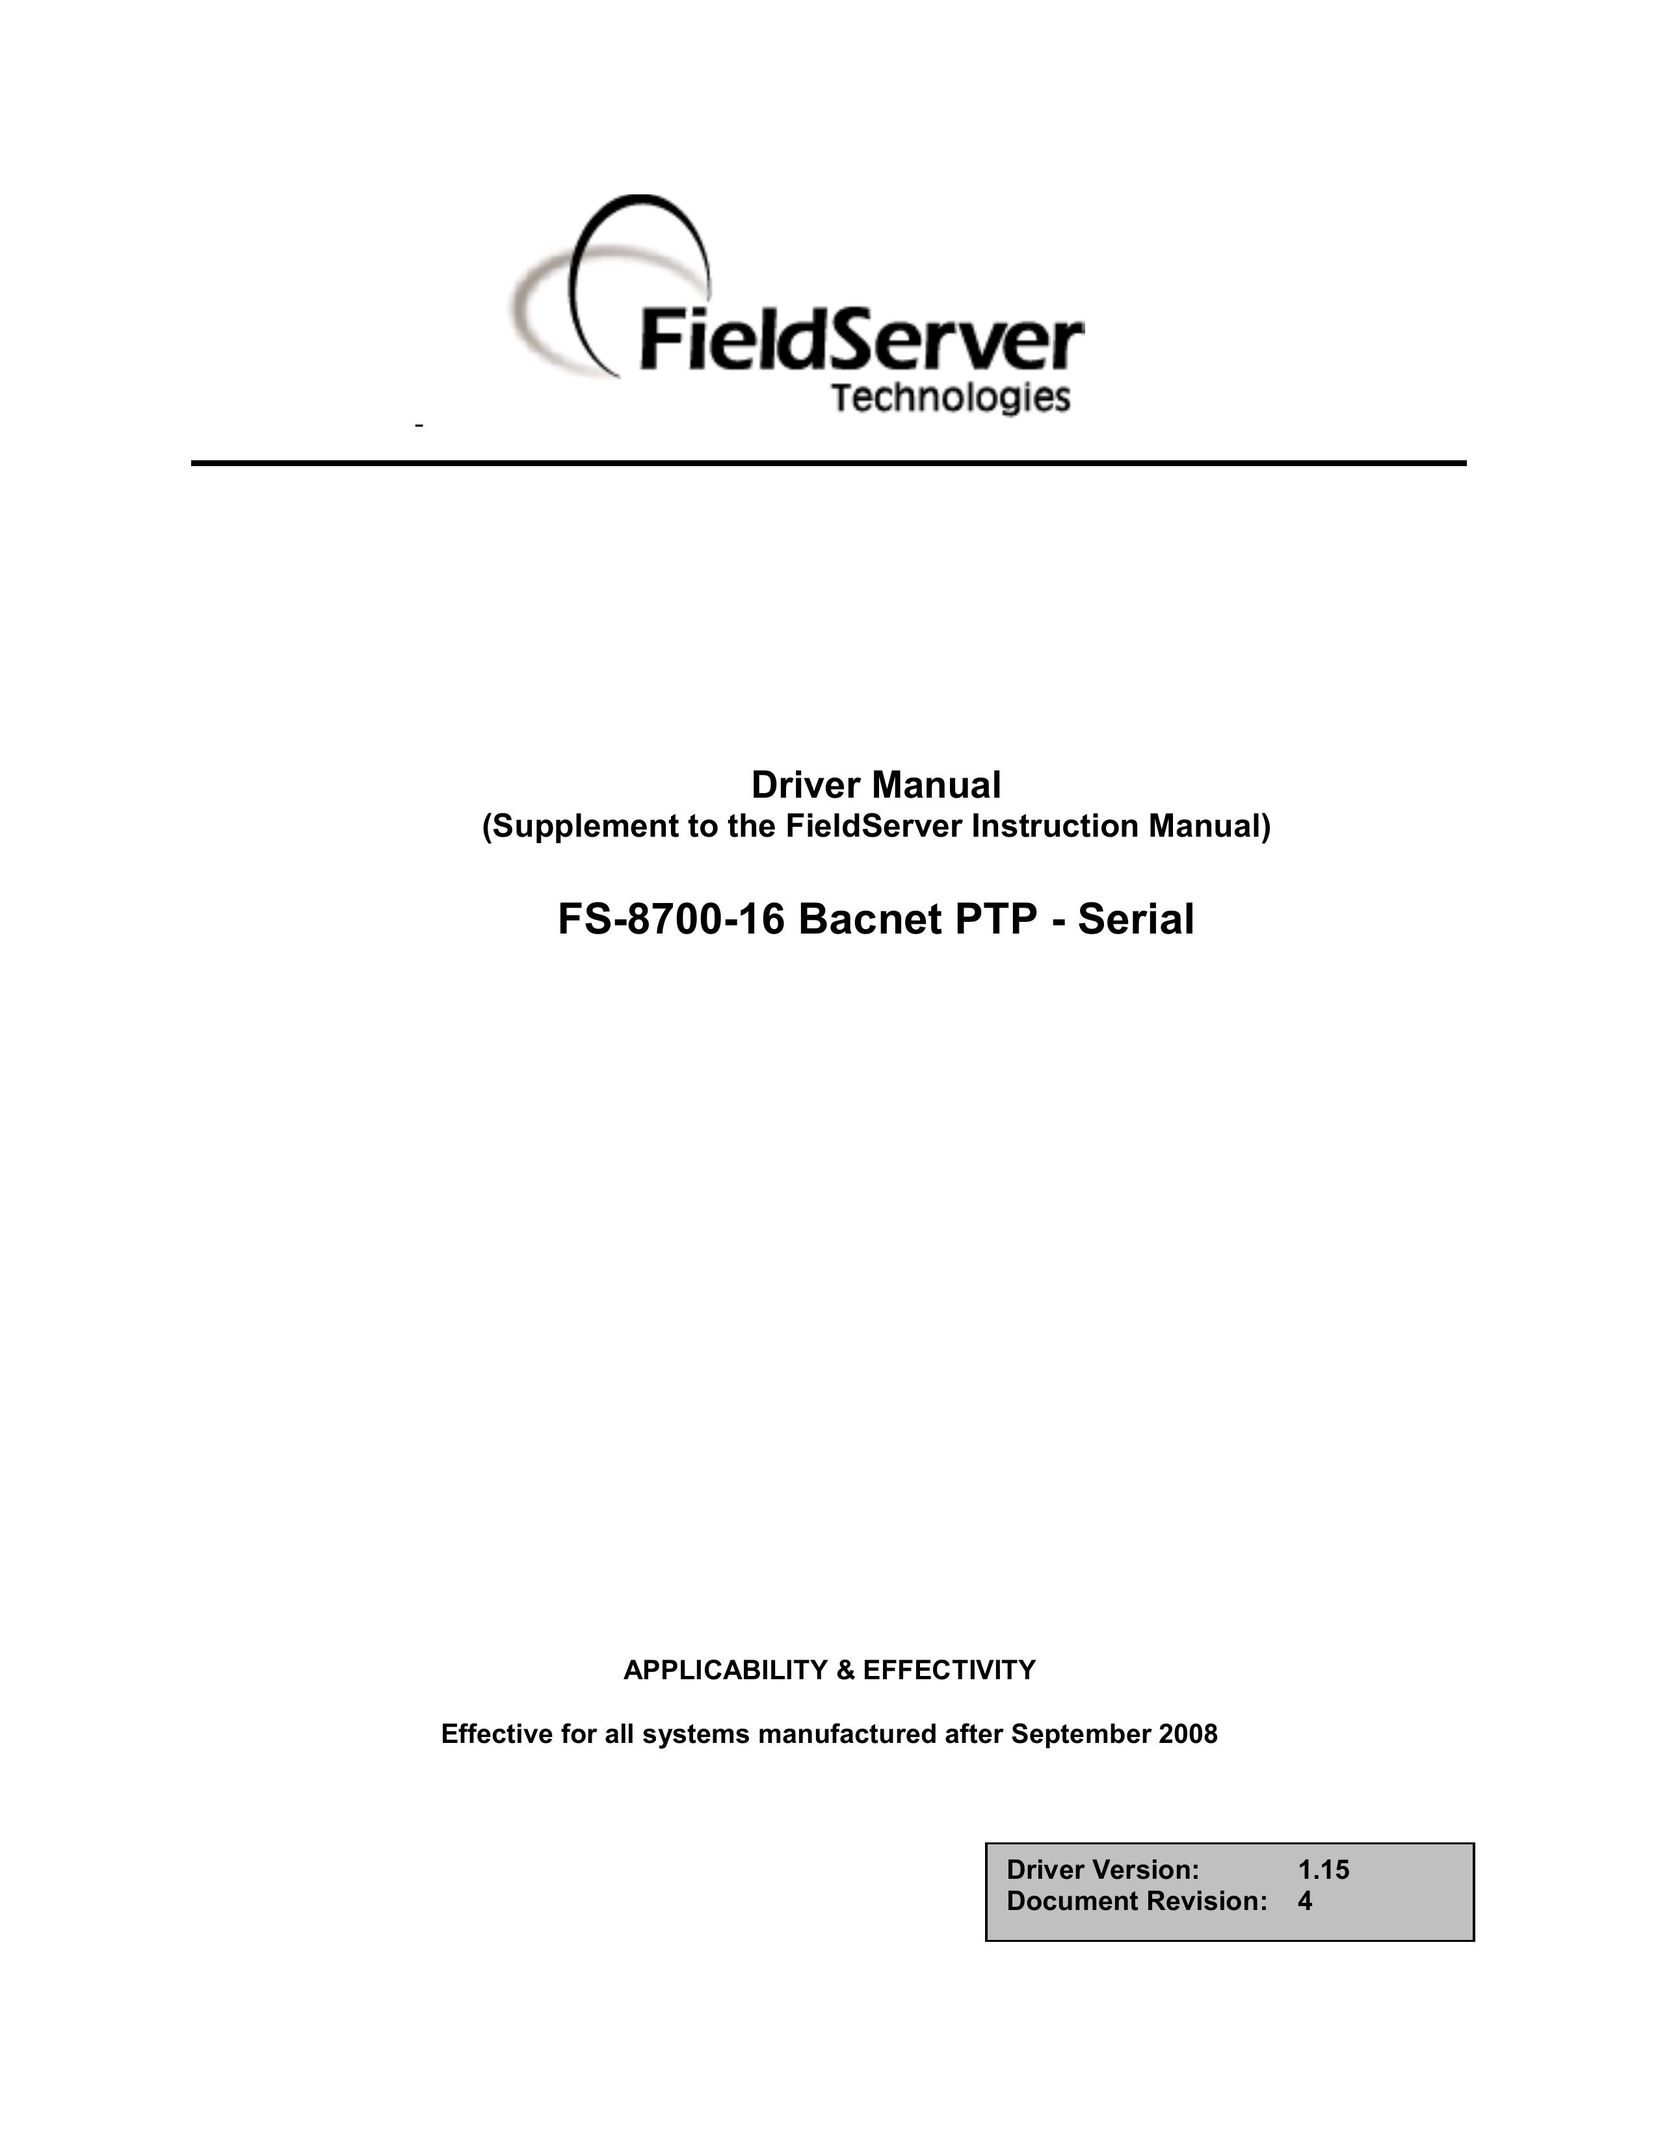 FieldServer FS-8700-16 Computer Drive User Manual